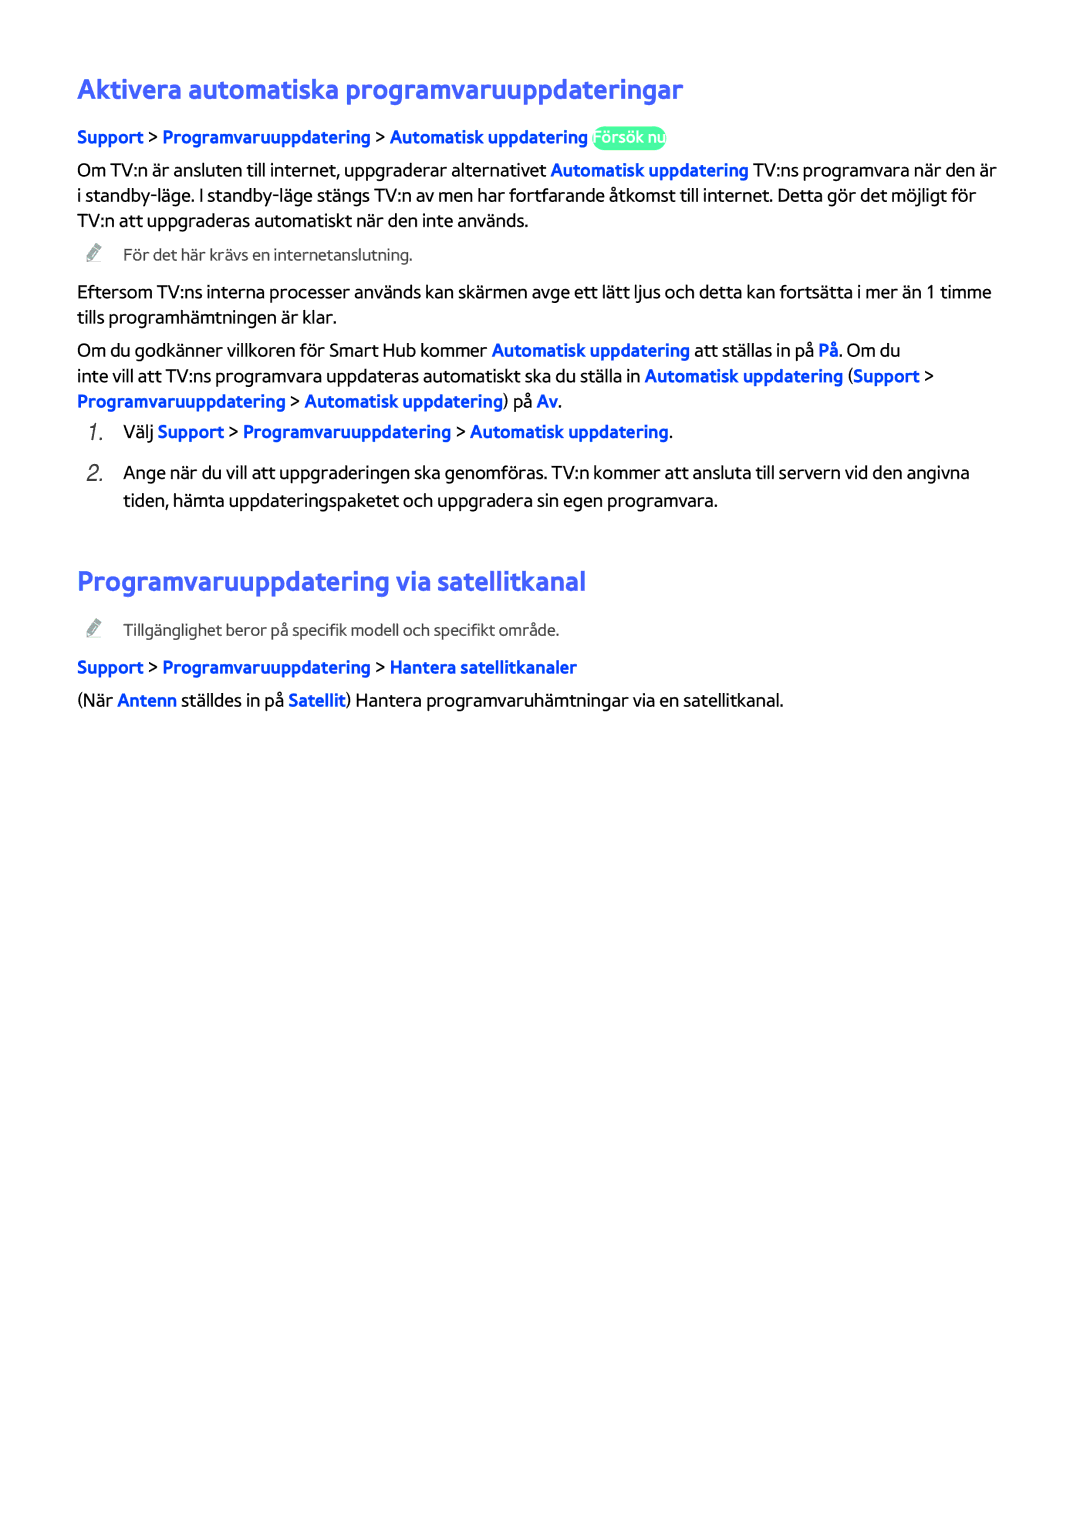 Samsung UE48H5204AKXXE manual Aktivera automatiska programvaruuppdateringar, Programvaruuppdatering via satellitkanal 